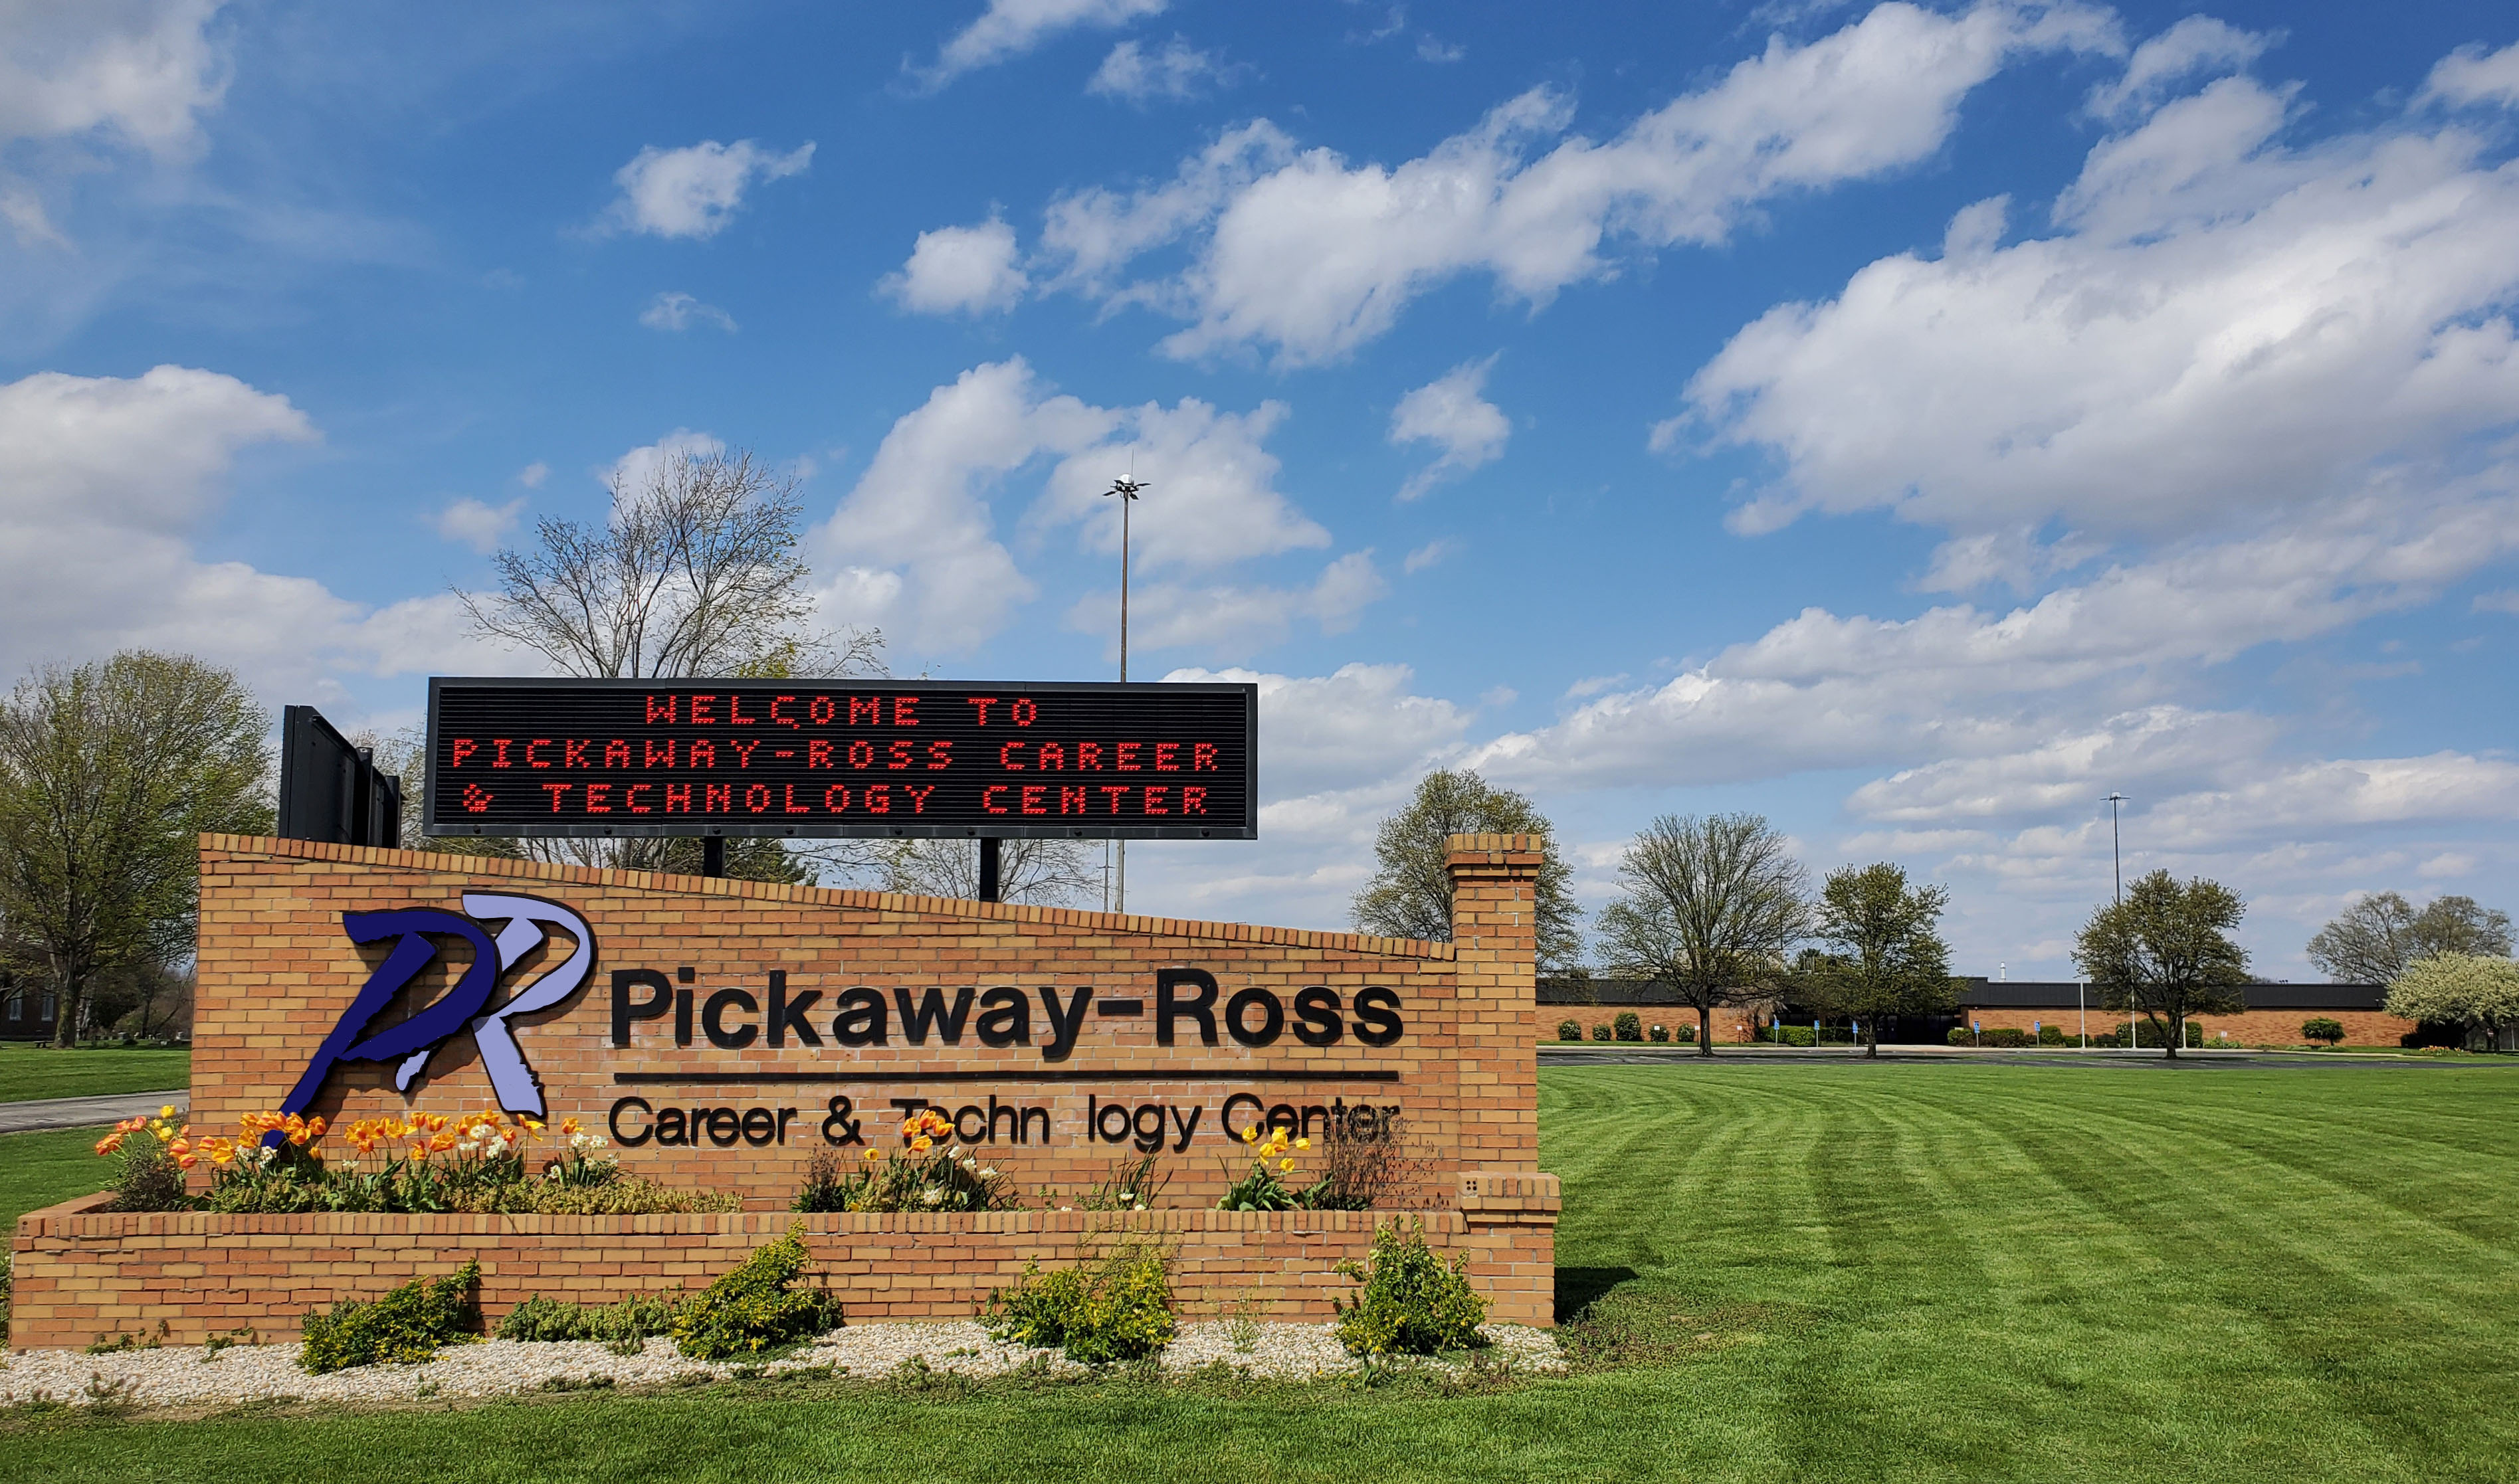 pickaway ross career and technology center street sign